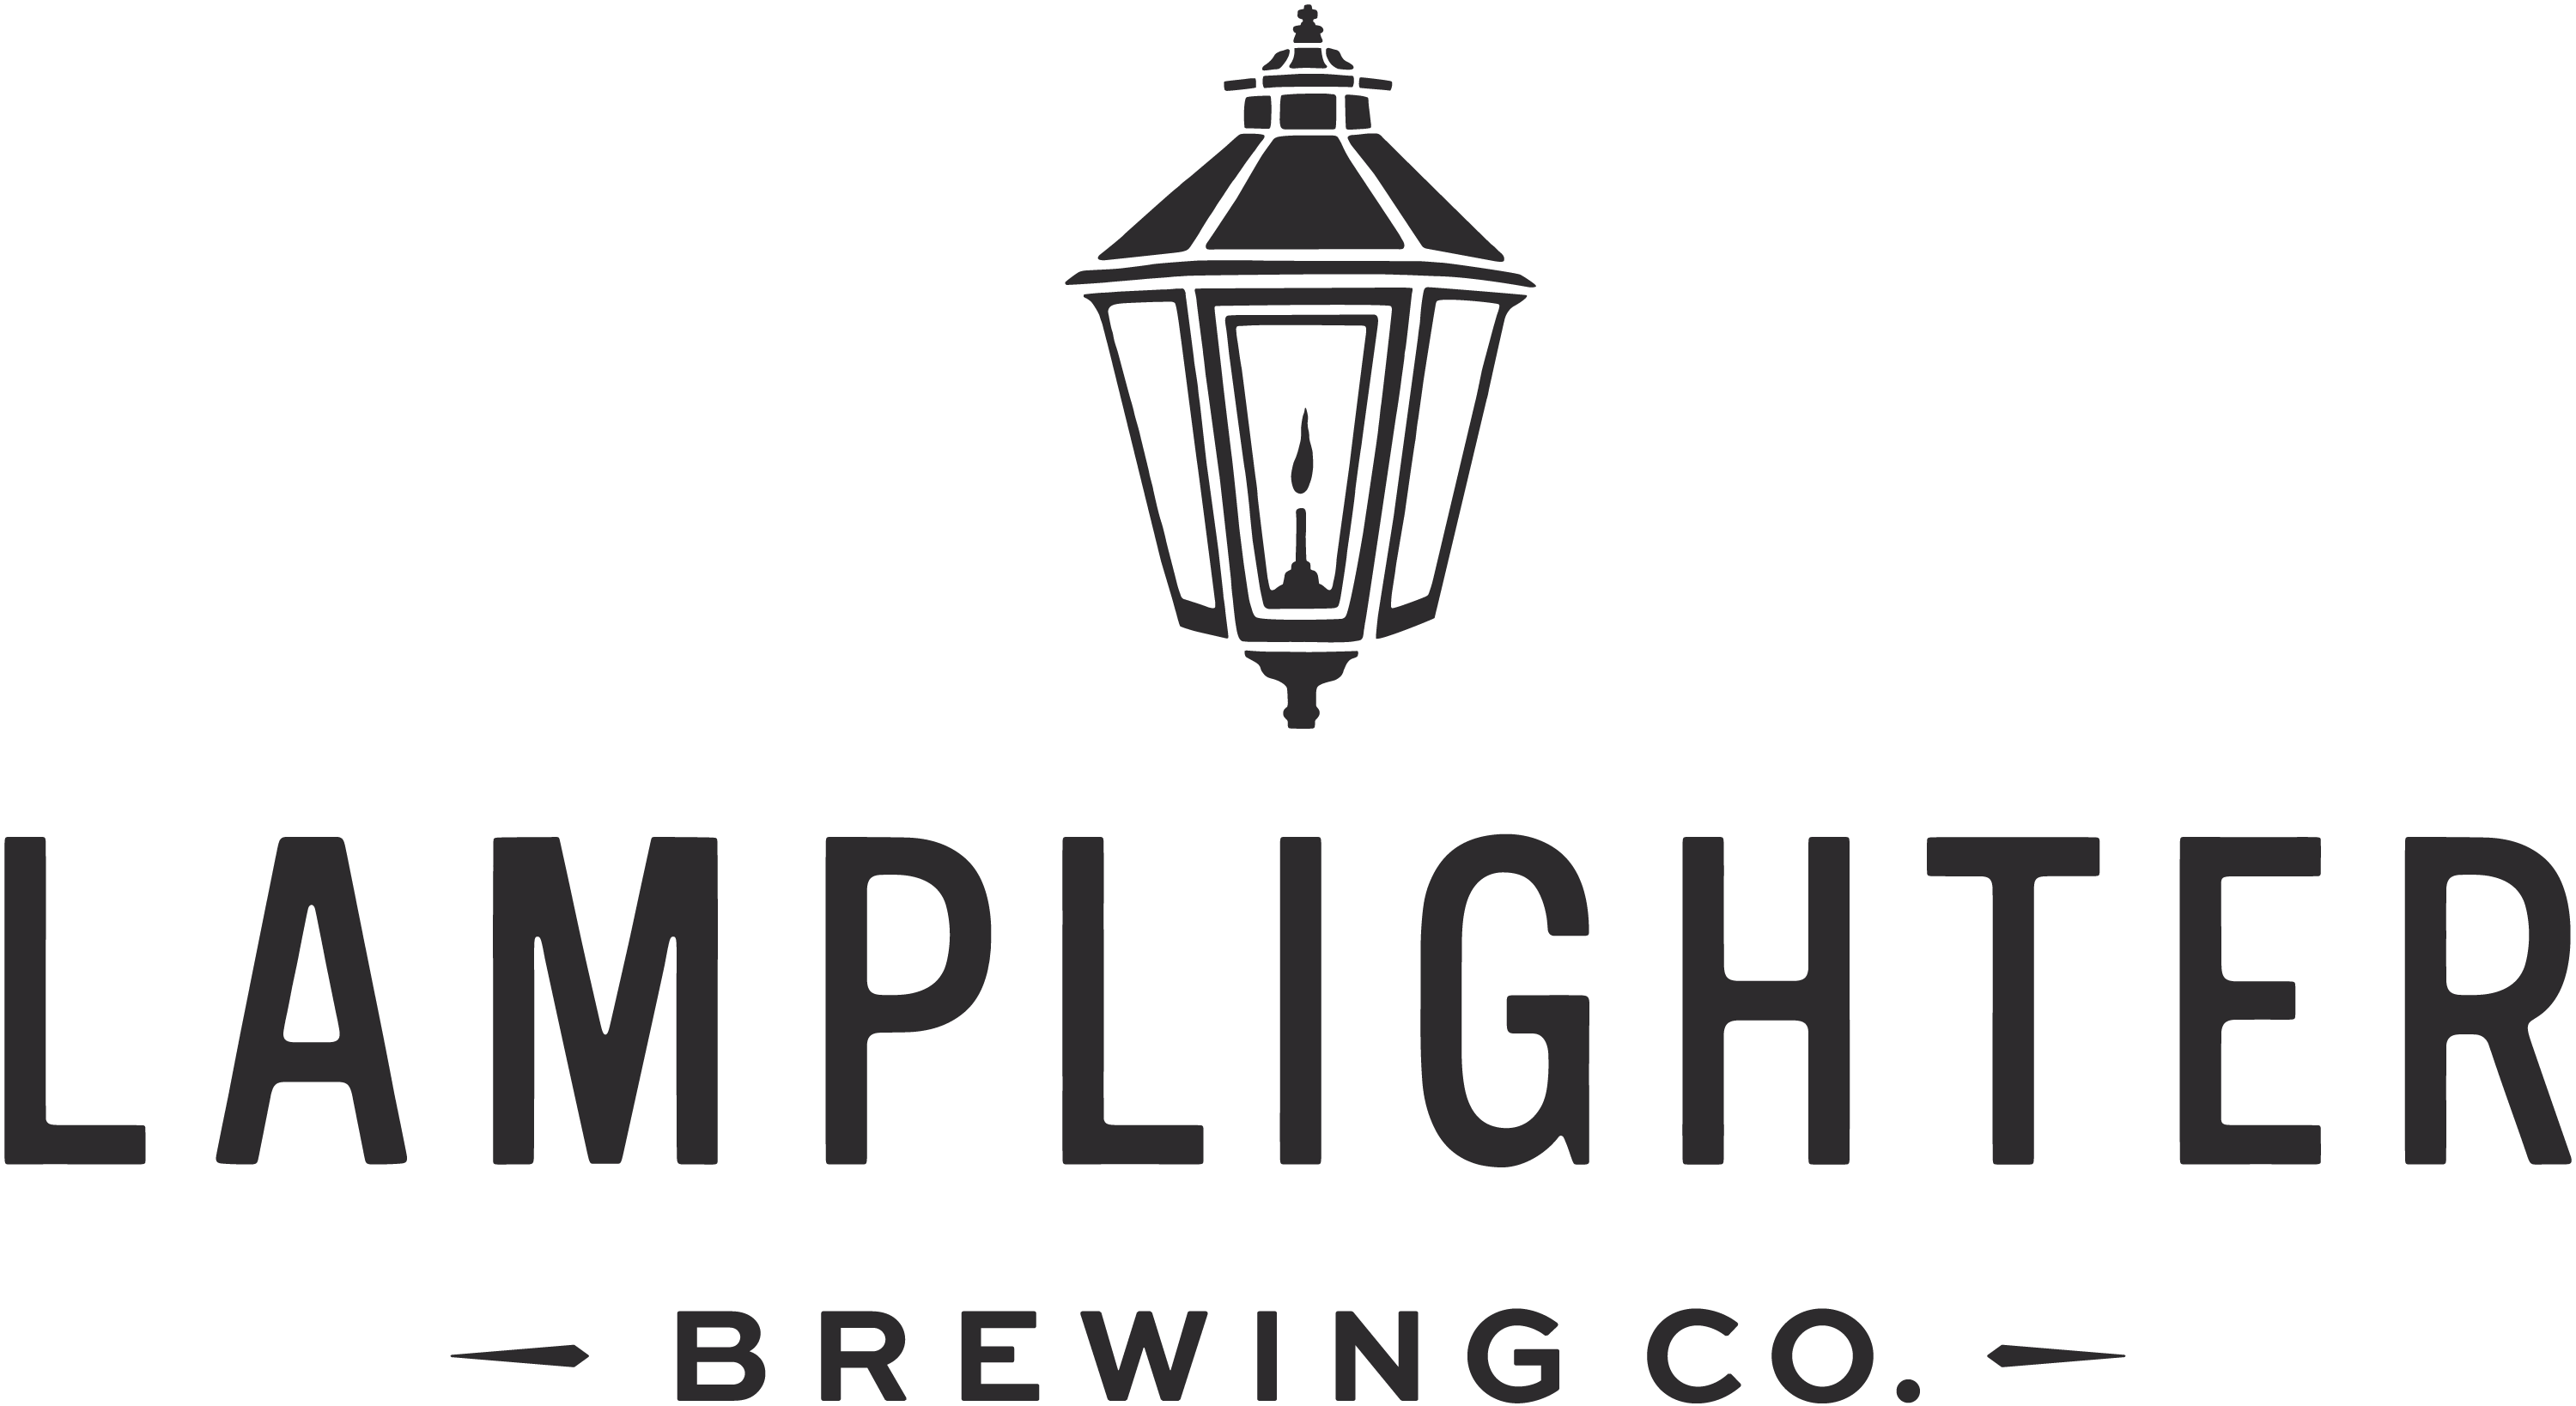 Lamplighter Brewing Co